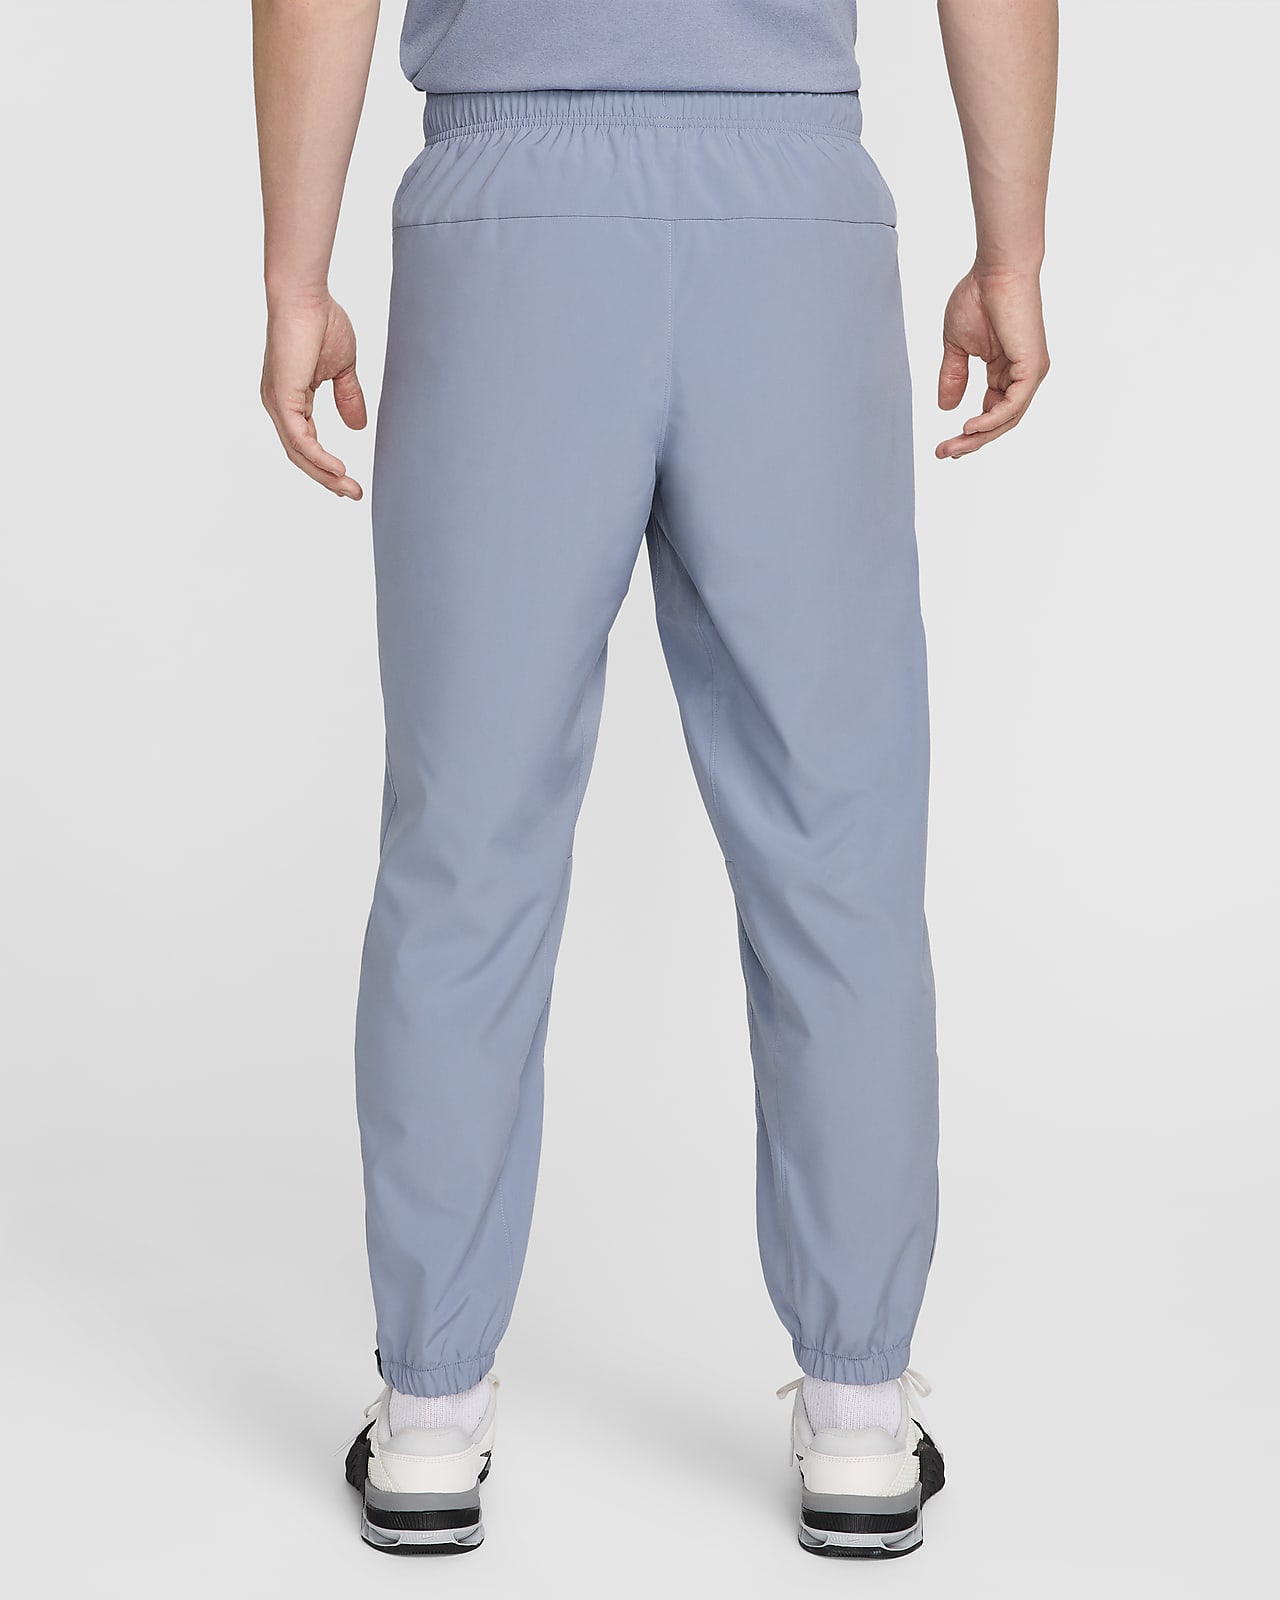 Buy Nike Men's Dri-FIT Dry Graphic Tapered Training Pants Multi